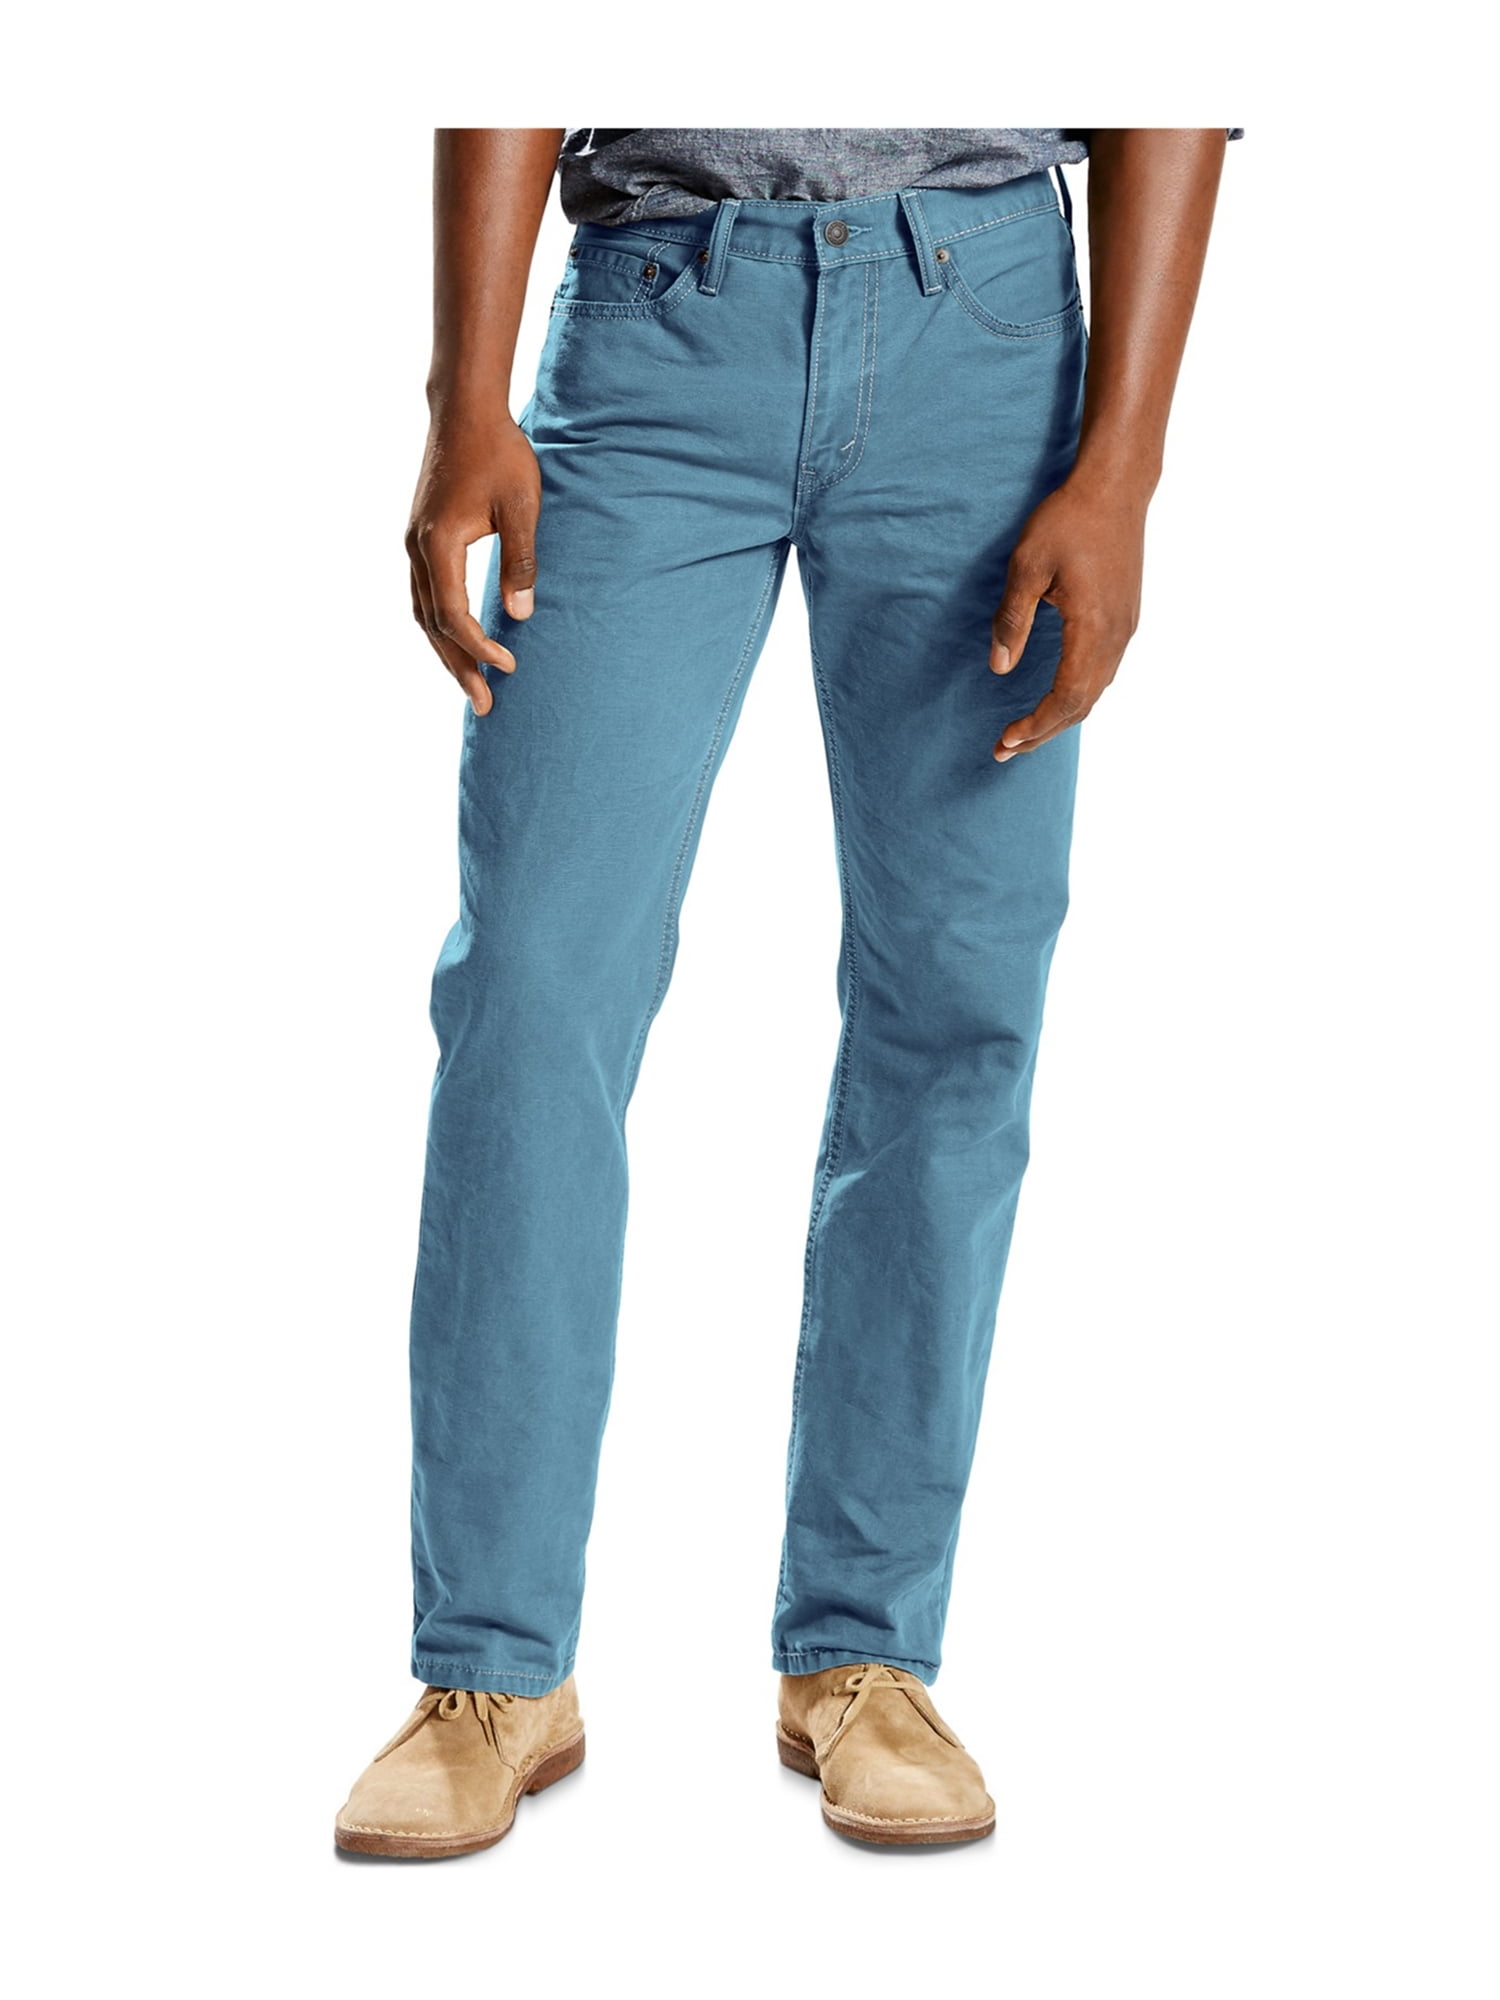 Levi's Mens Corduroy Straight Leg Jeans copenblue 38x30 | Walmart Canada